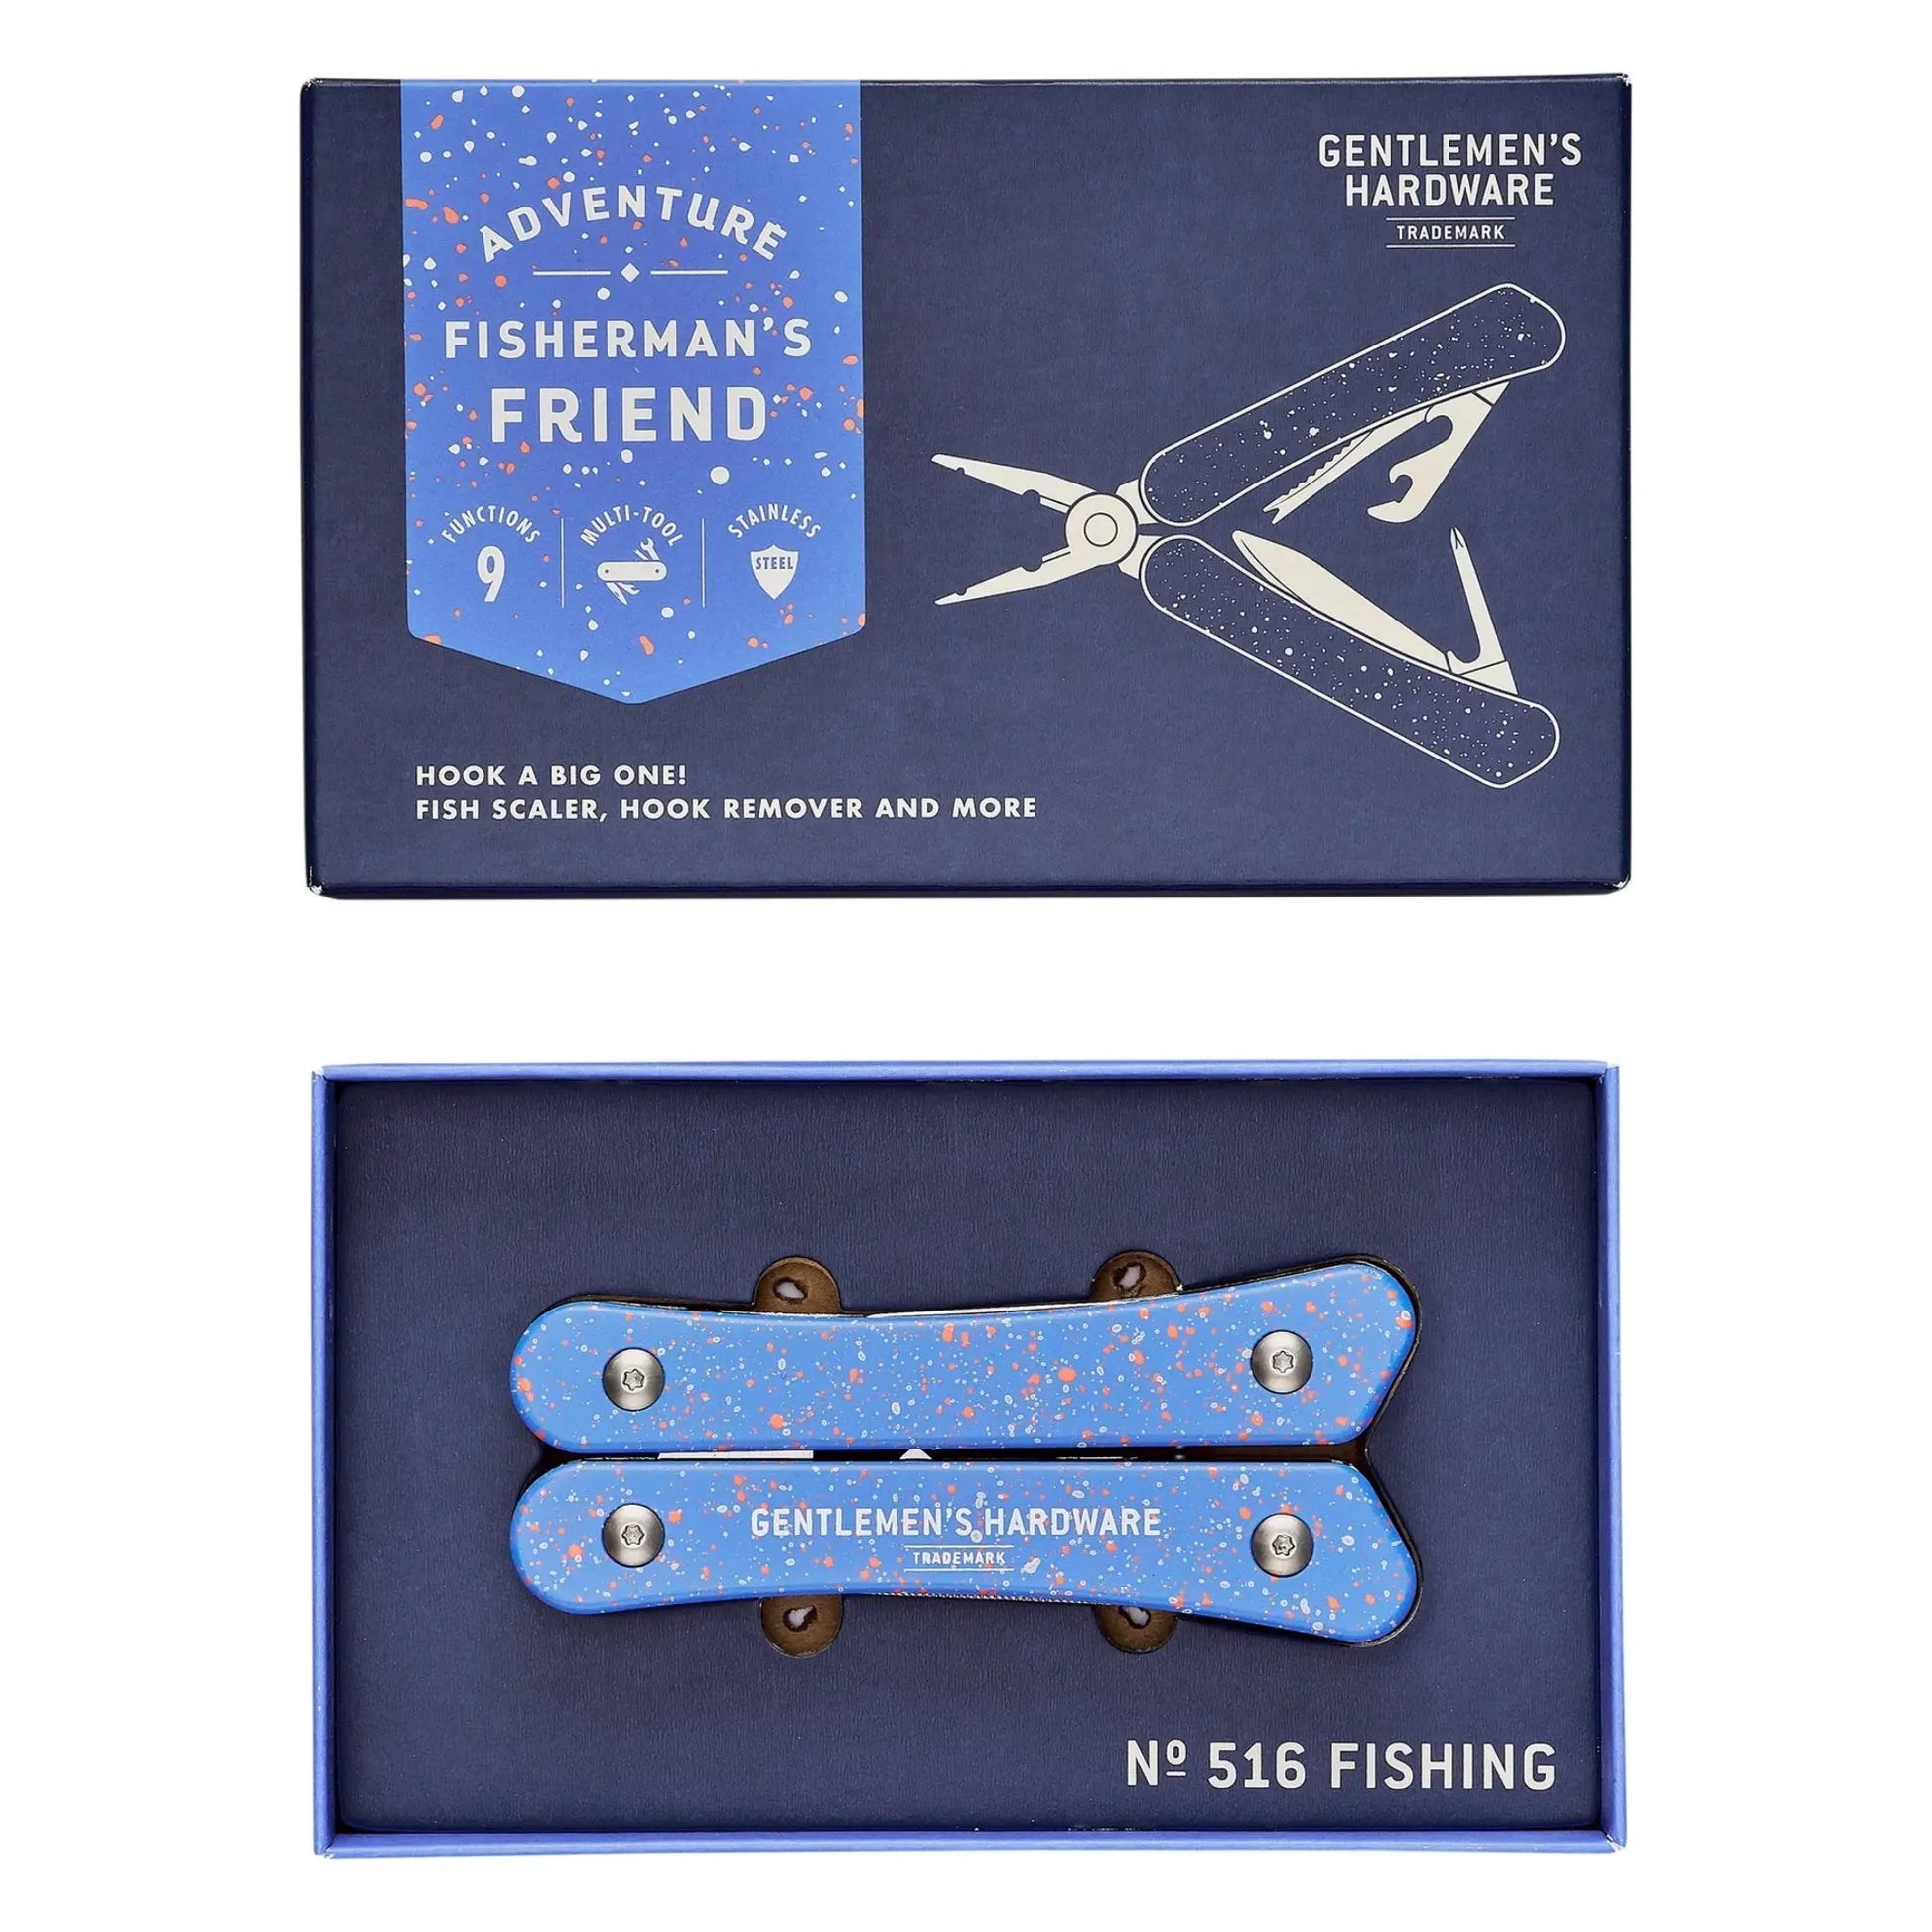 Buy Gentlemen's Hardware Fisherman's Friend - Multi-Tool | Penknifes at Woven Durham